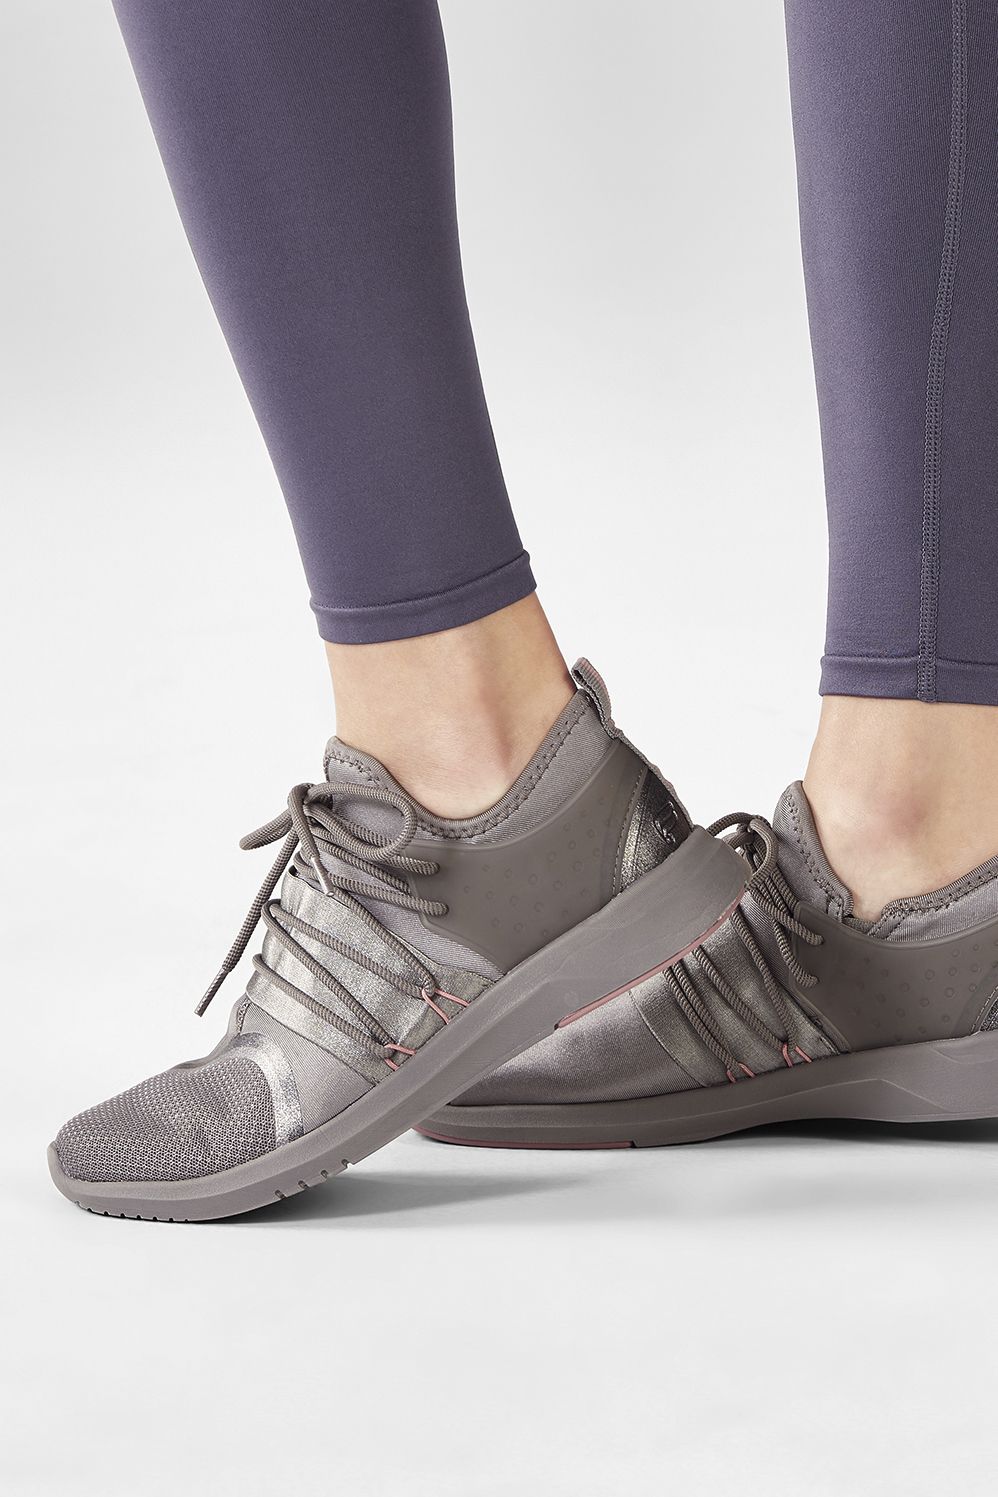 Fabletics Fashion Pismo Performance Sneaker Womens Harbor Size 6 | Fabletics